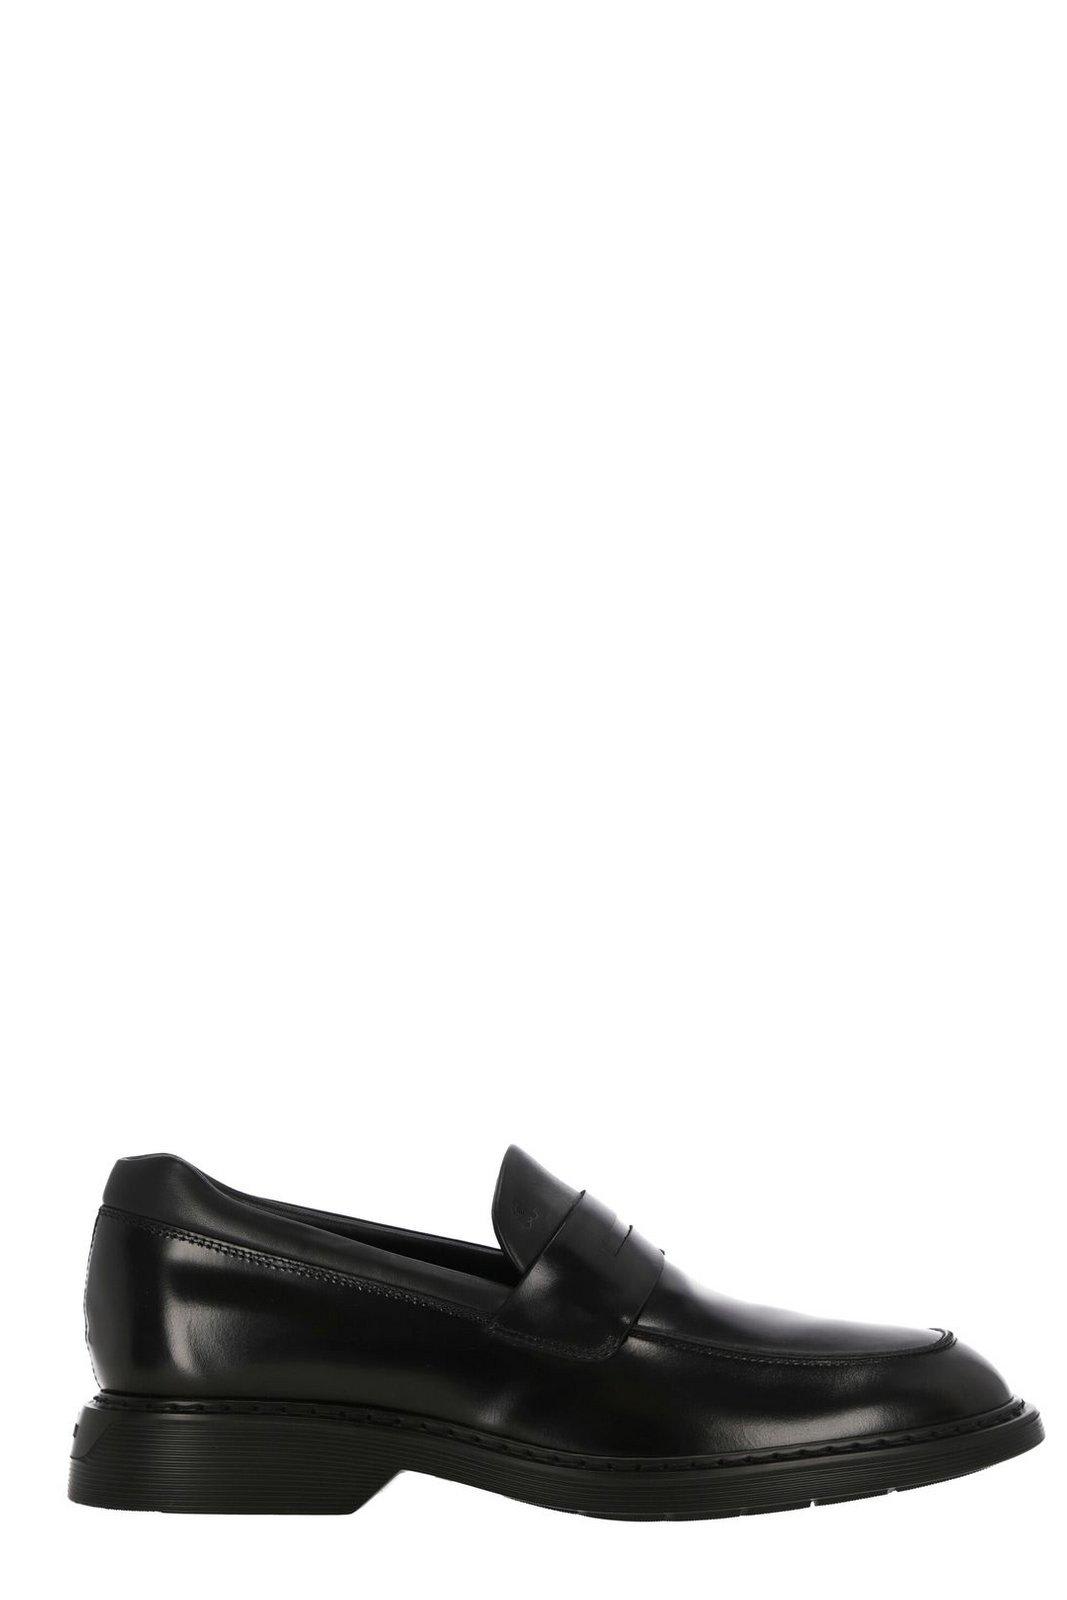 Hogan H576 Slip-on Loafers In Black